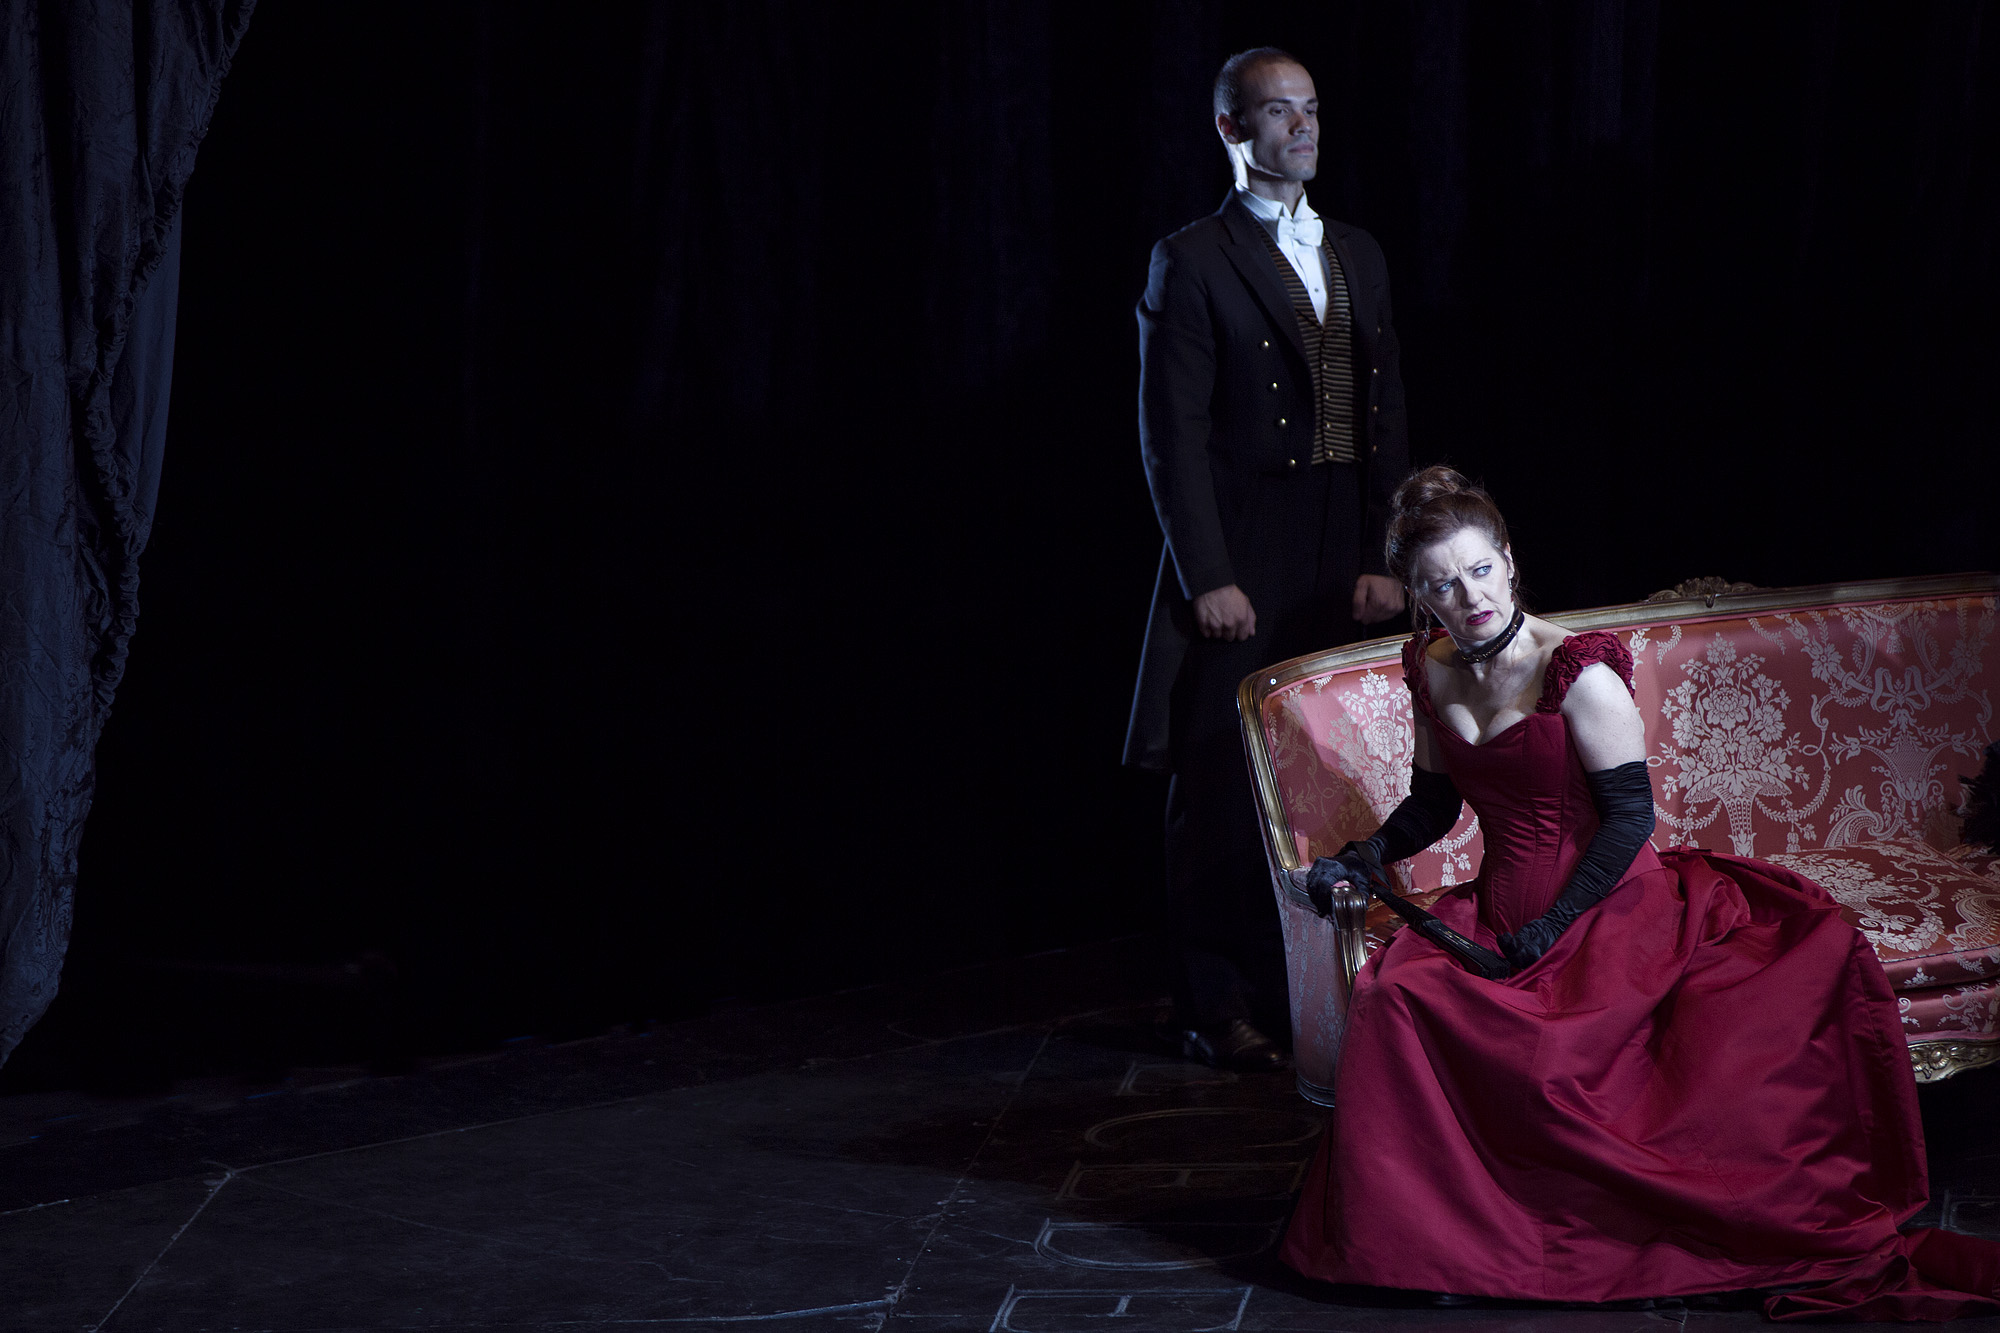 La Traviata, Liceu 2014-15, Miriam Lazaro.